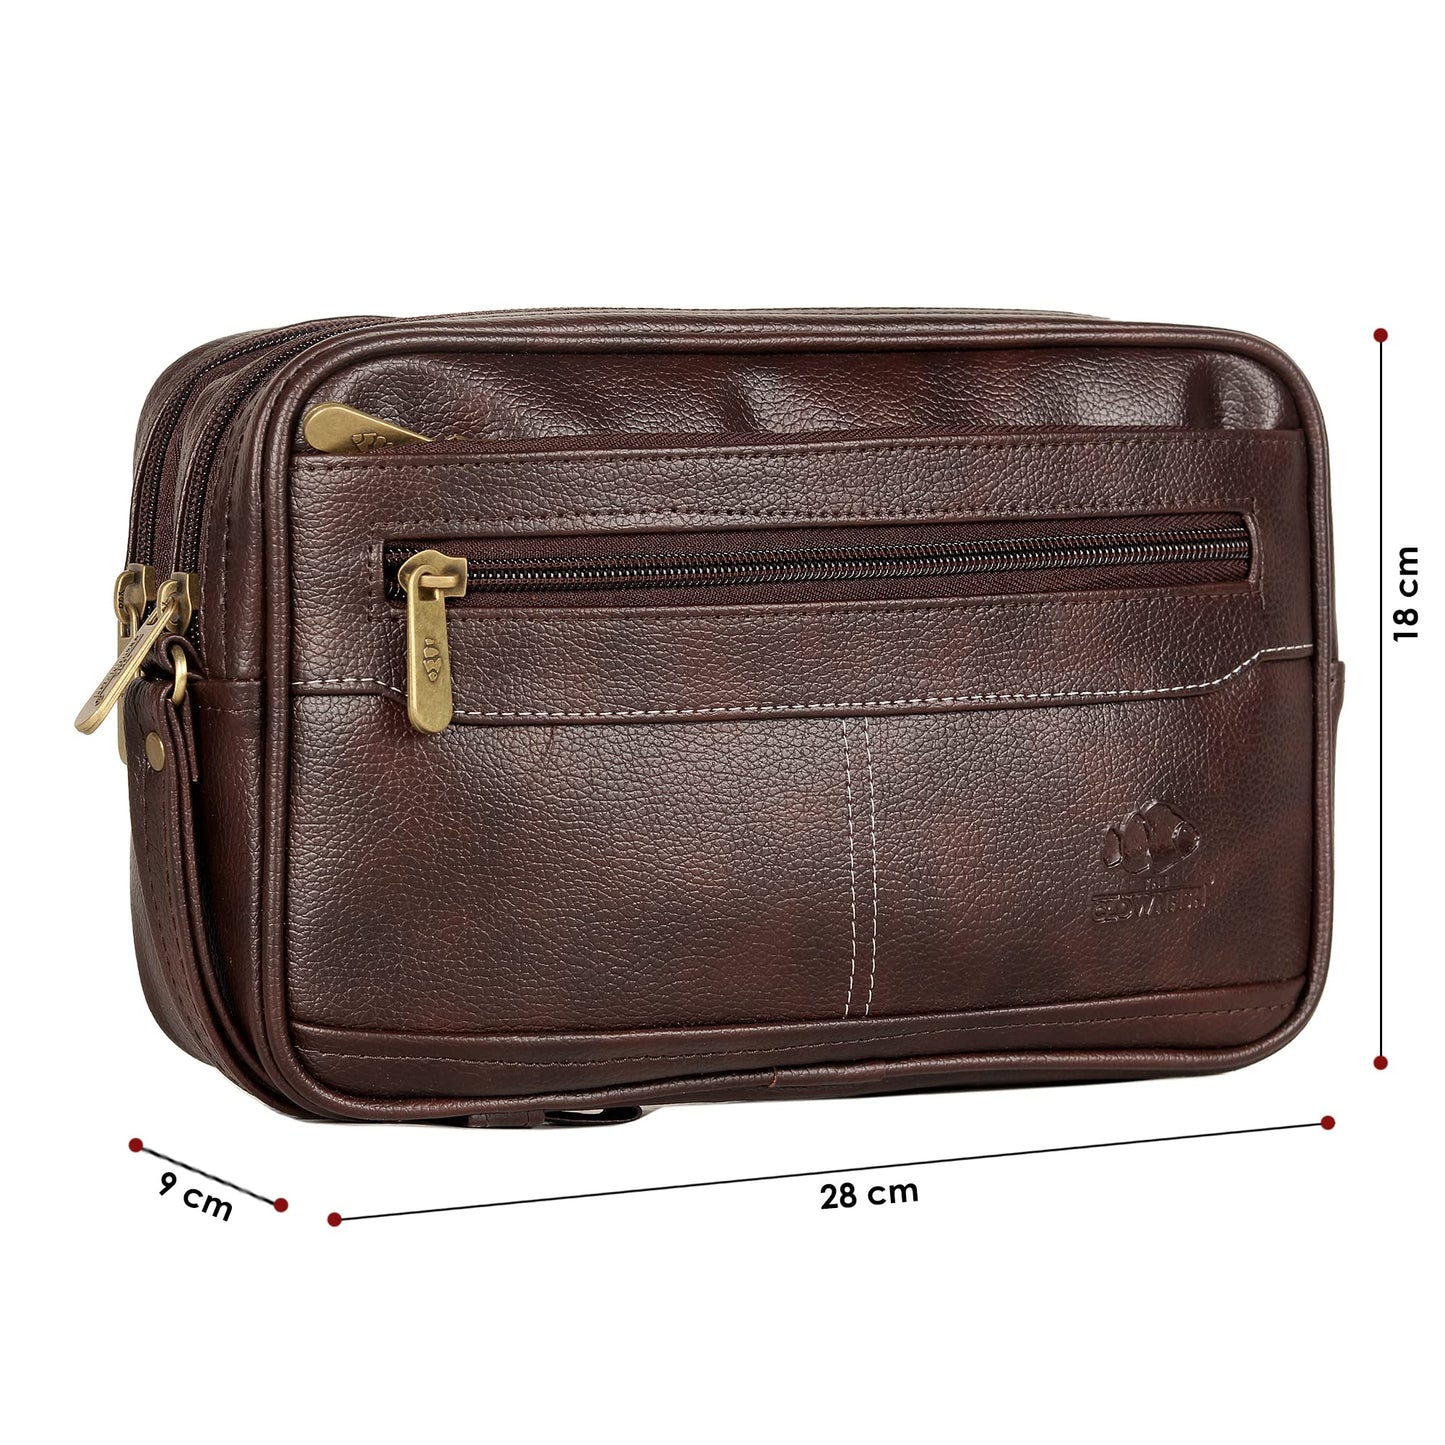 THE CLOWNFISH Unisex Multipurpose Travel Pouch Money Cash Pouch Wrist Handbag Clutch With Wrist Handle (Dark Brown)